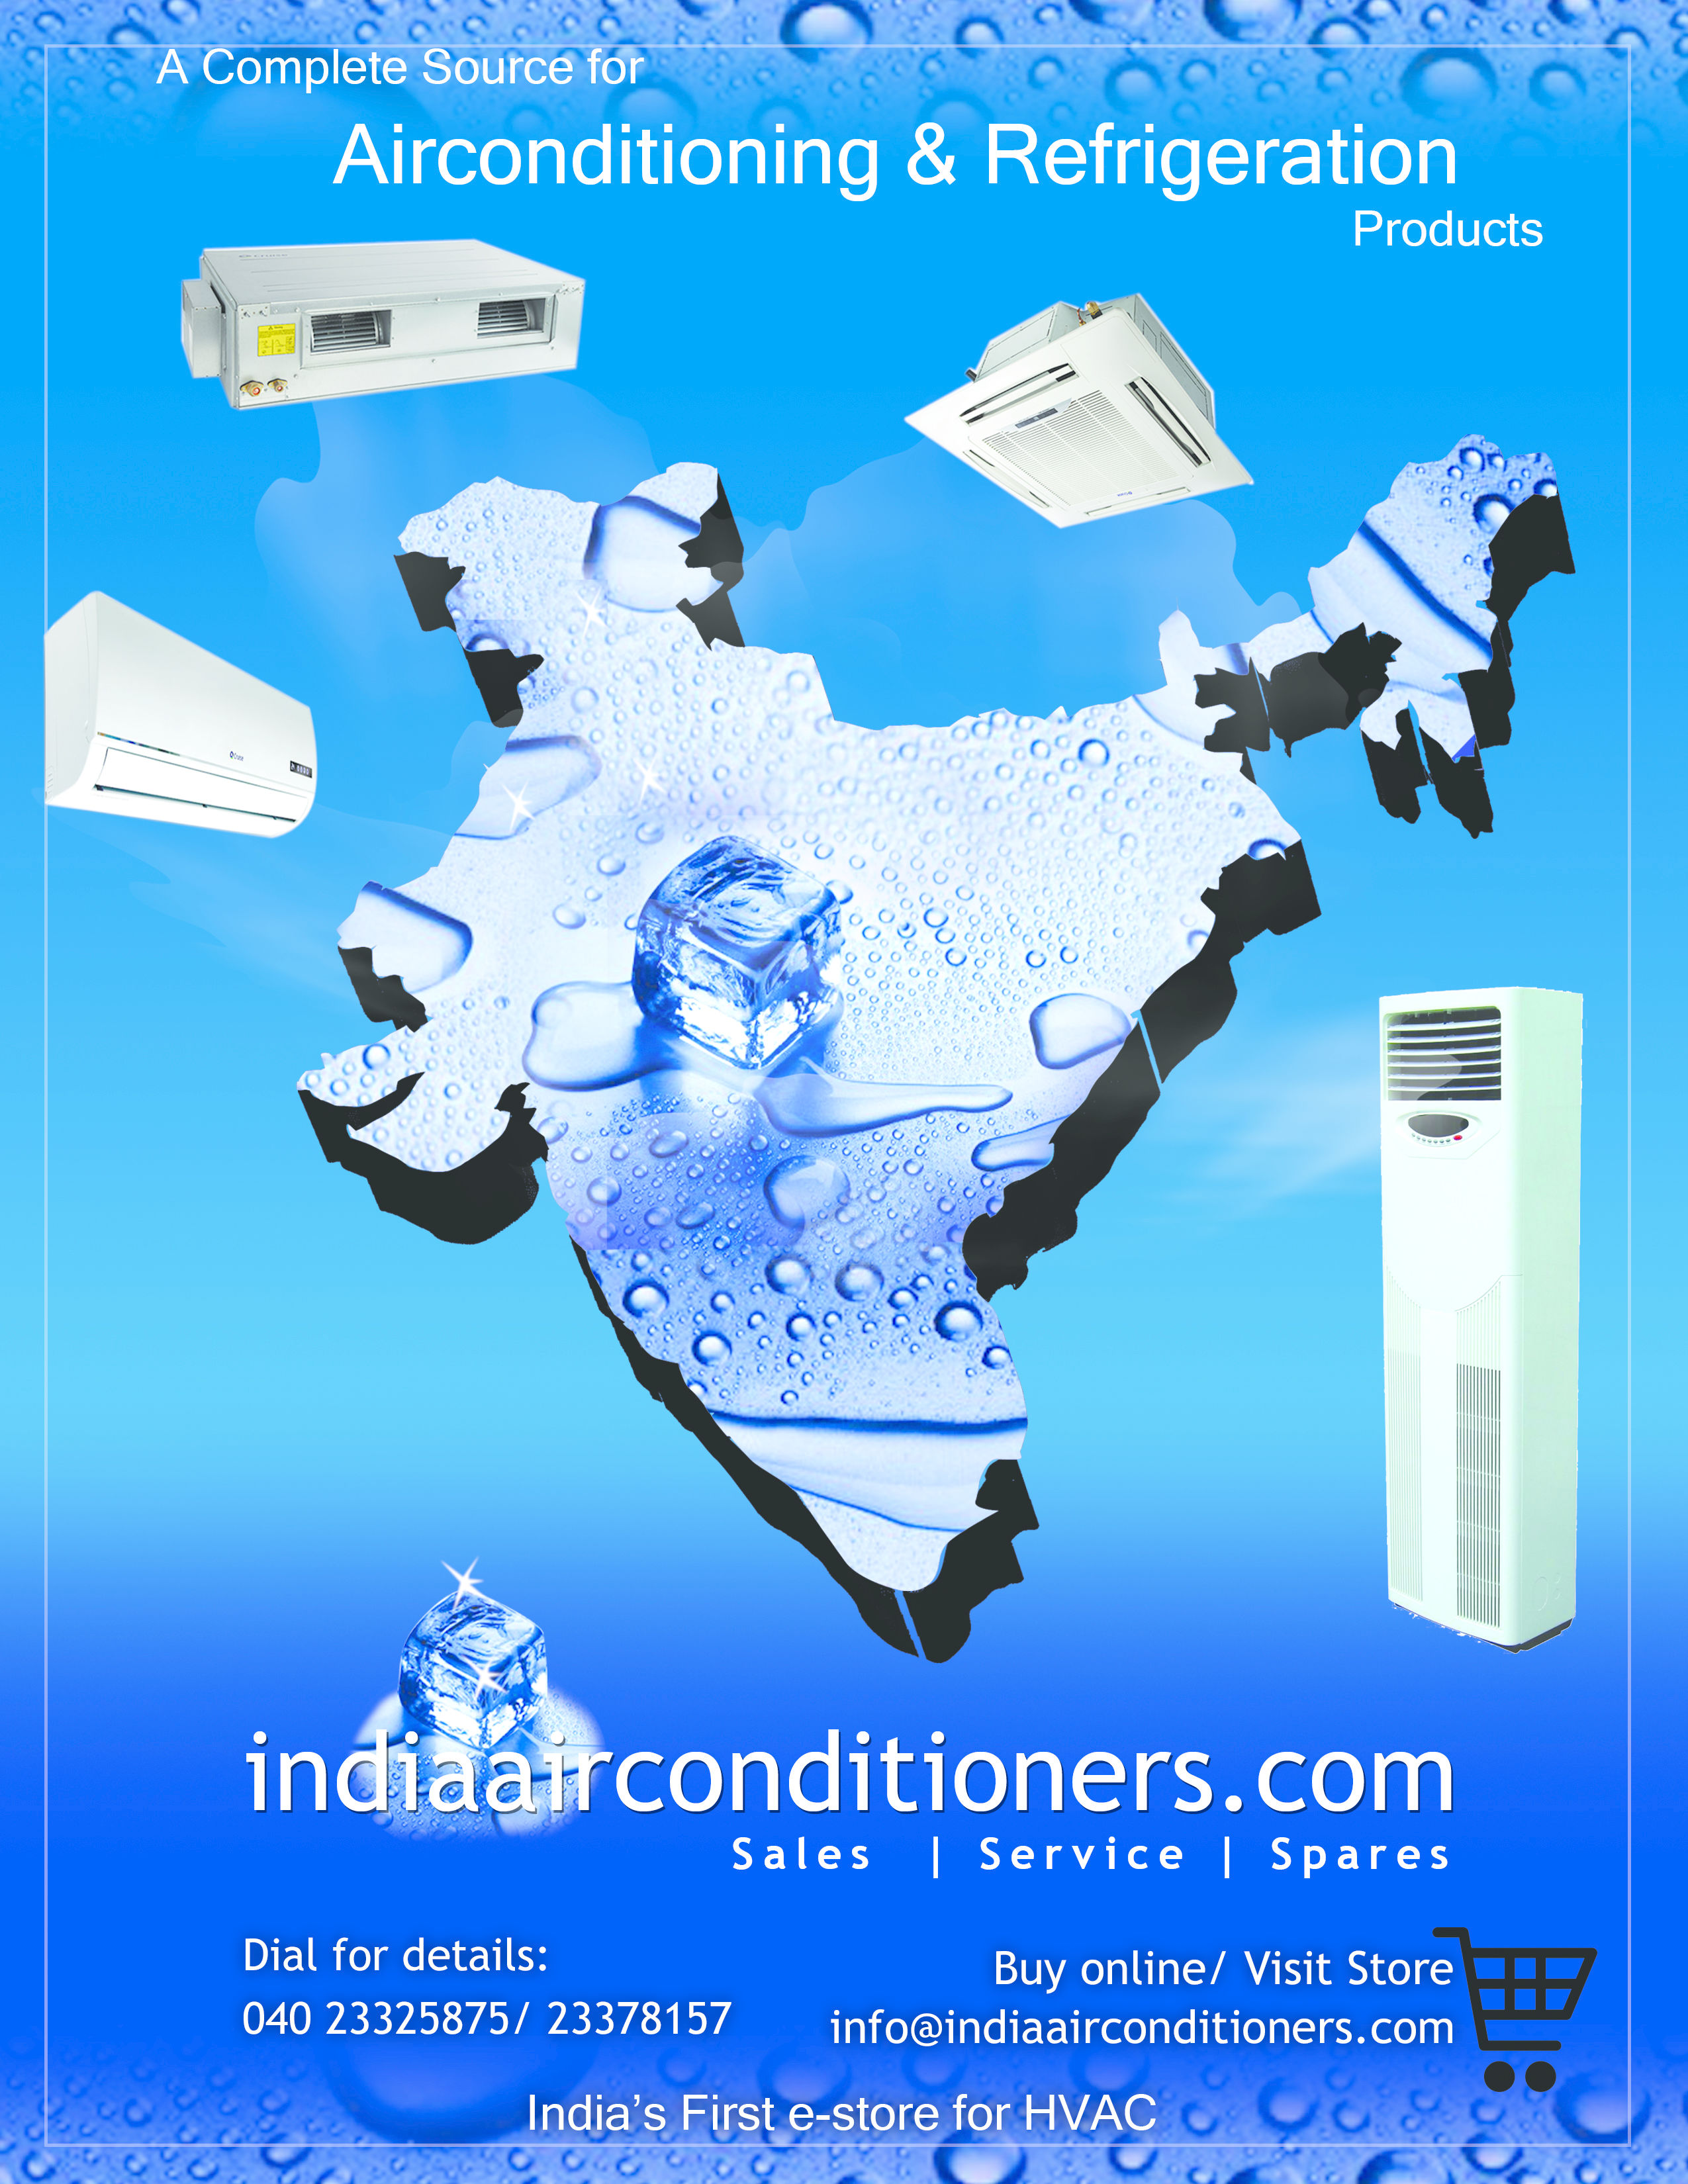 indiaairconditioners